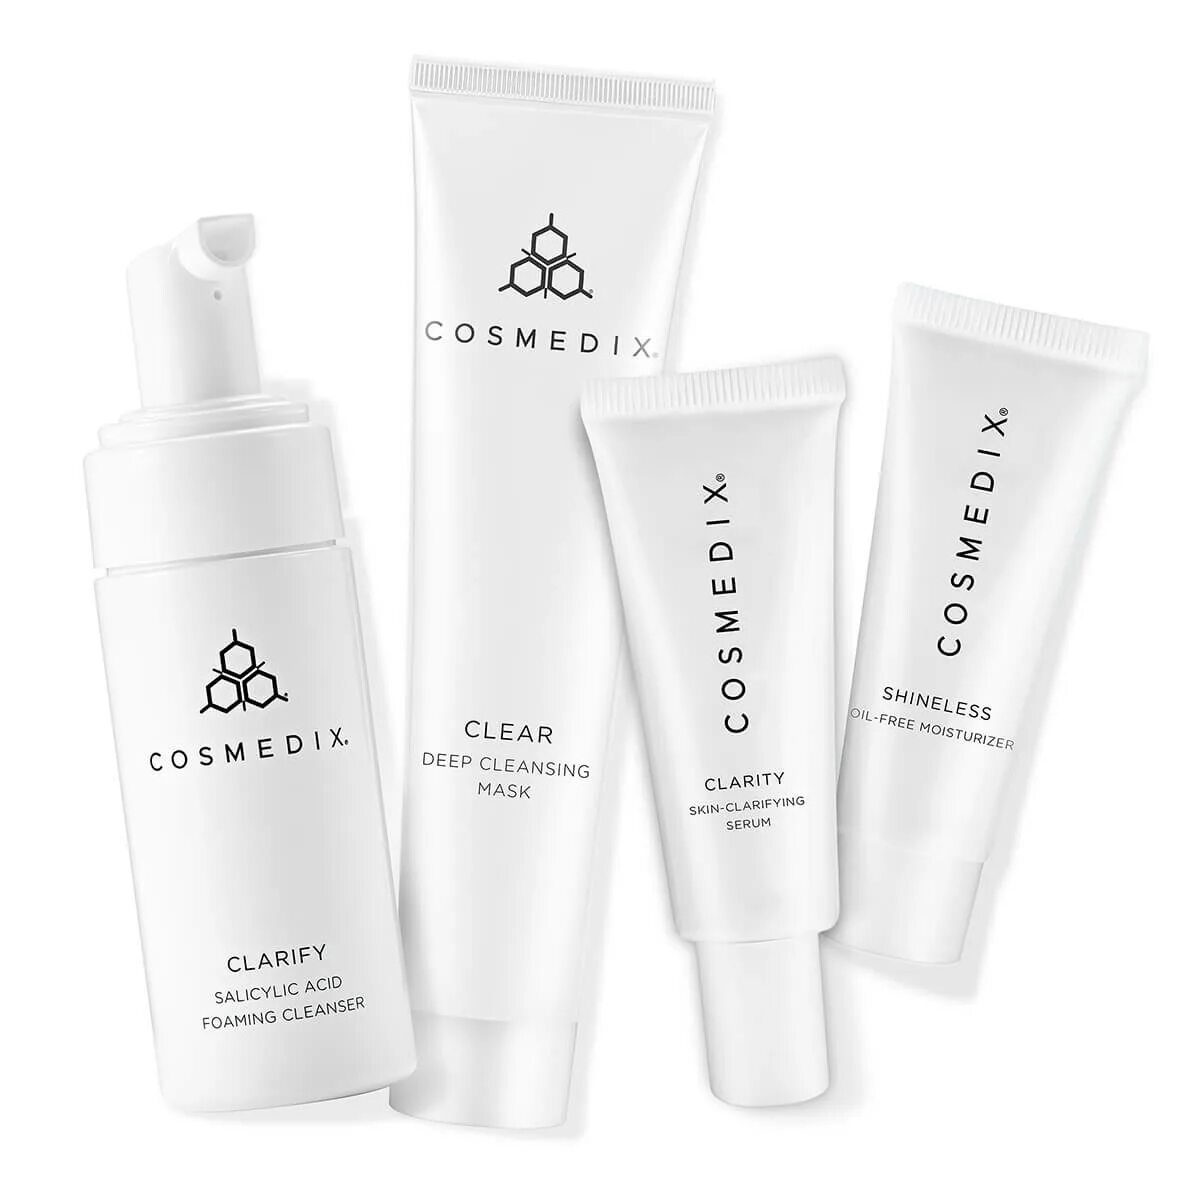 Clarifying cleansing. COSMEDIX combination Skin Kit. COSMEDIX clarify Salicylic acid Foaming Cleanser, 60ml. COSMEDIX shineless. Clarity COSMEDIX.